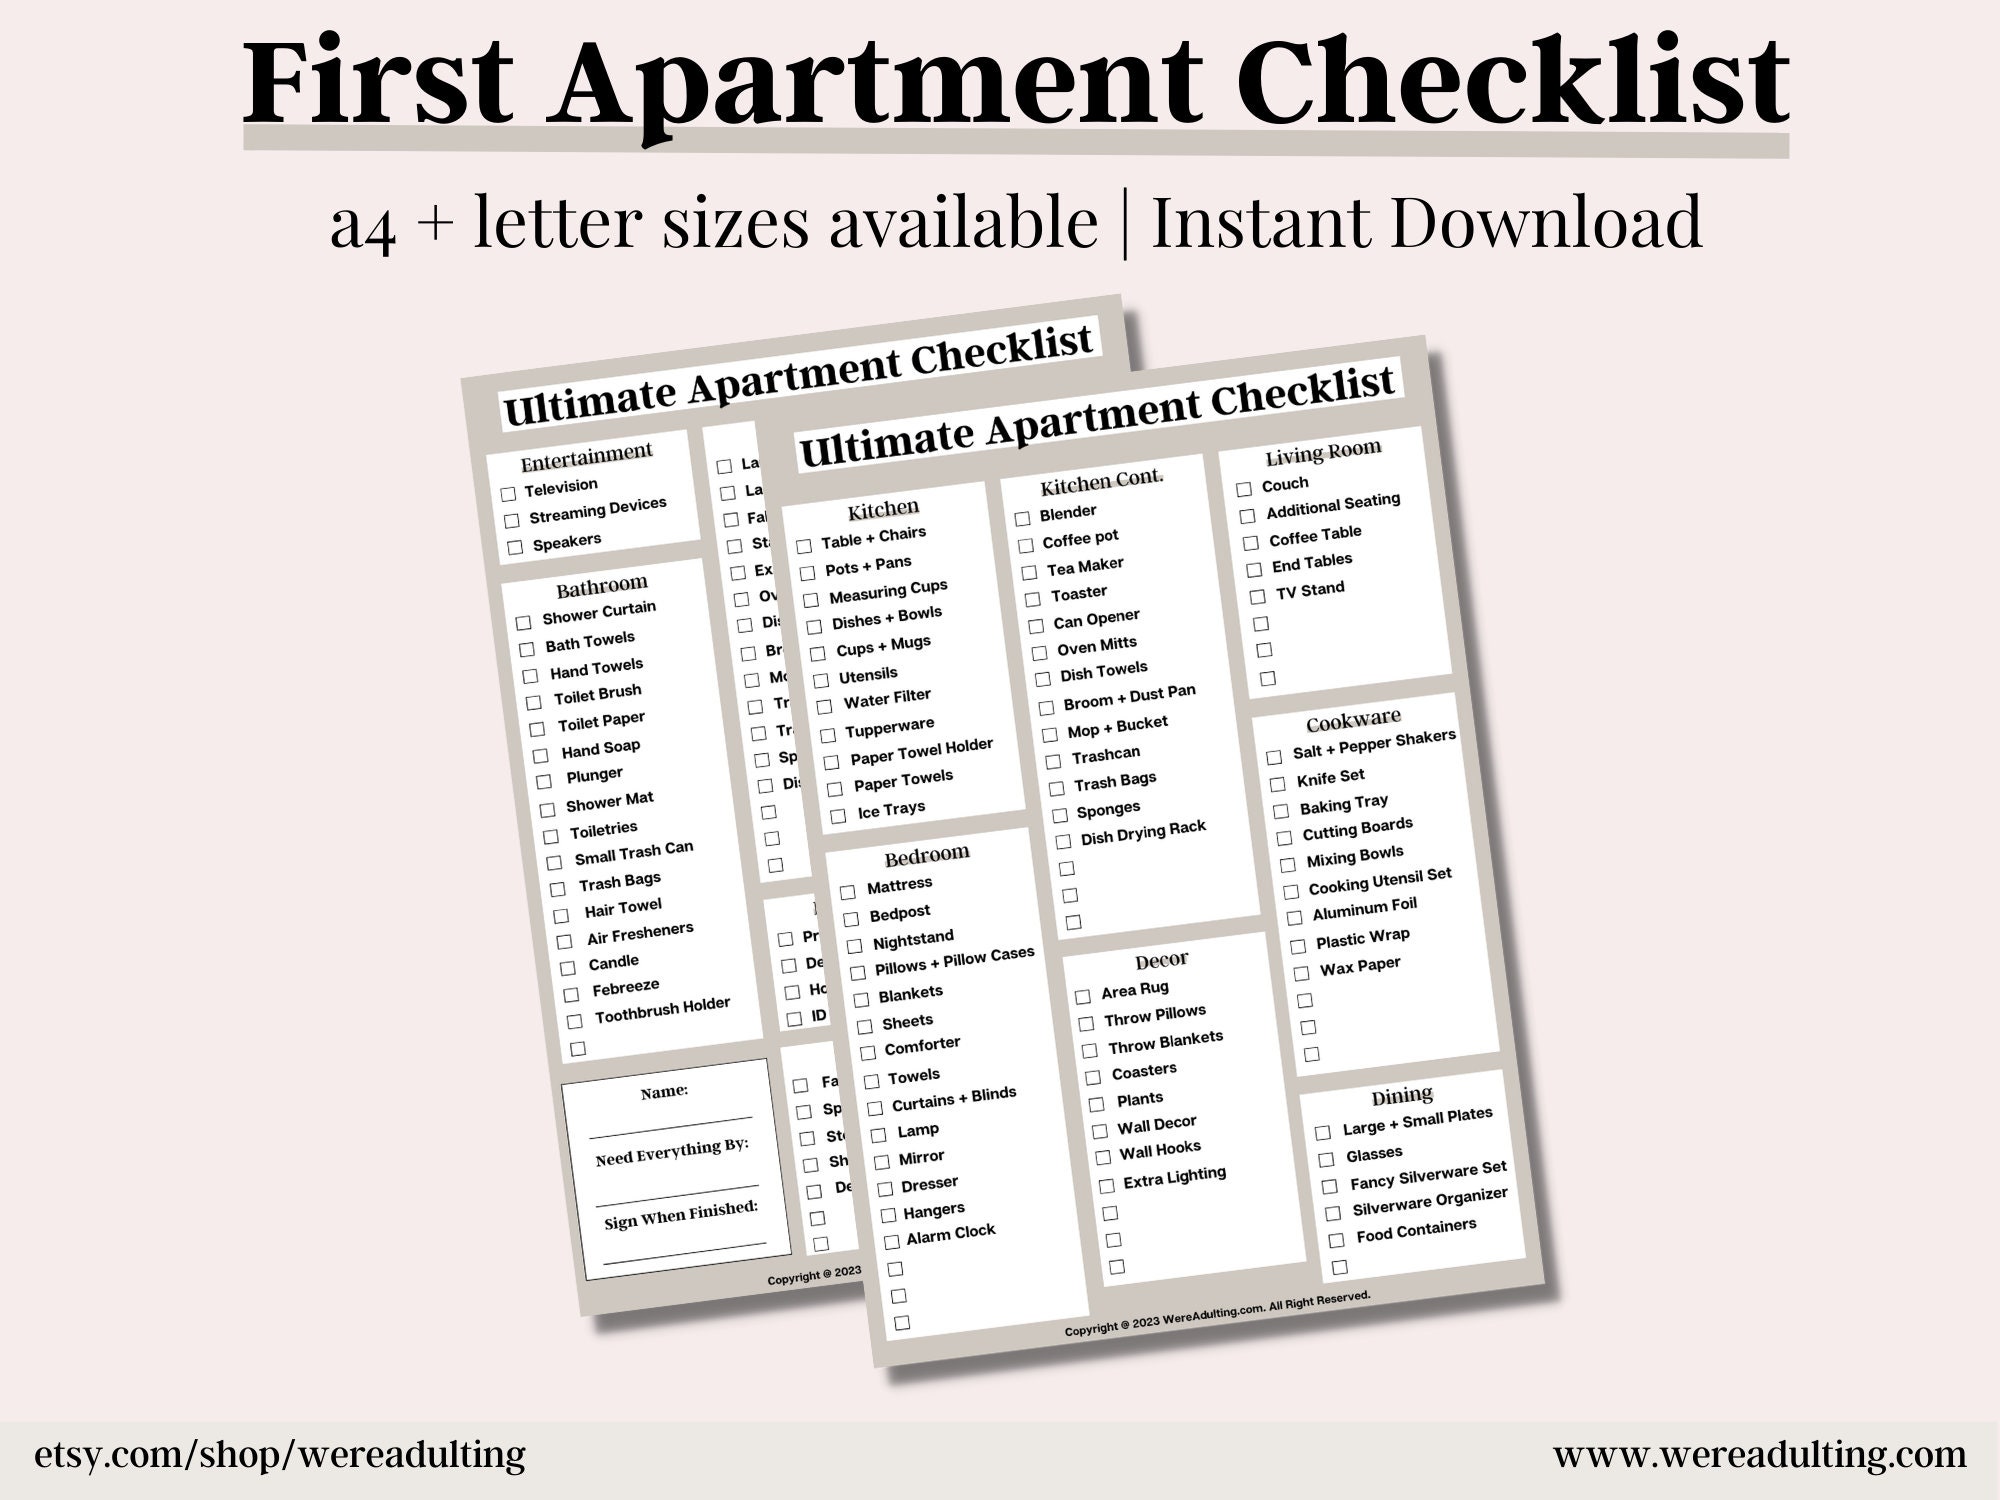 My First Apartment Checklist: FREE Printable  First apartment checklist,  First apartment, Apartment checklist